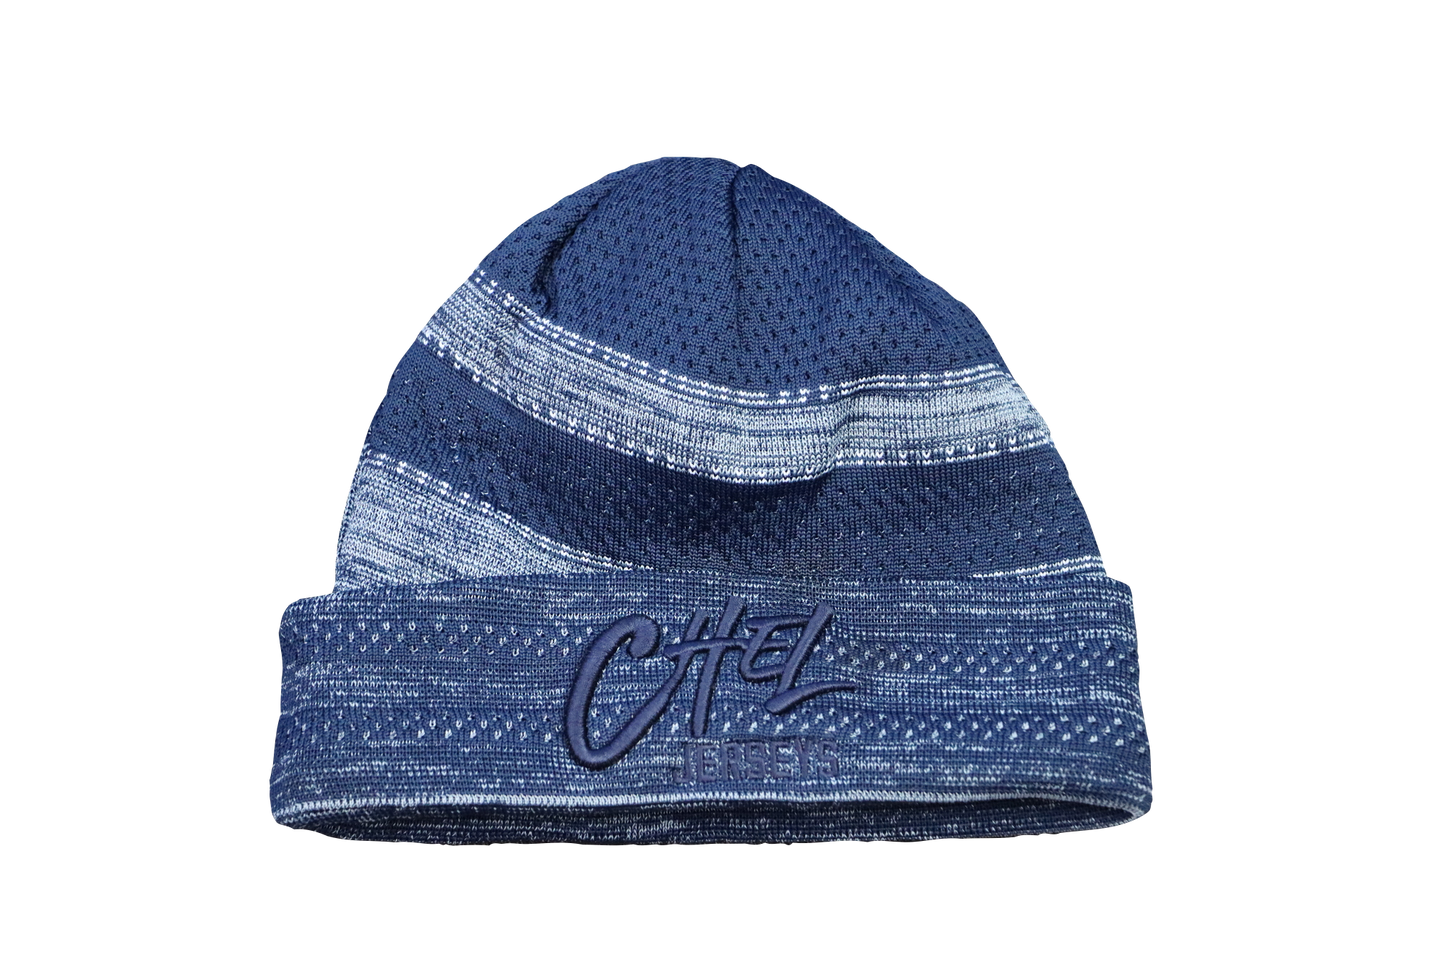 CHEL New Era ® On-Field Knit Beanie - Navy Blue